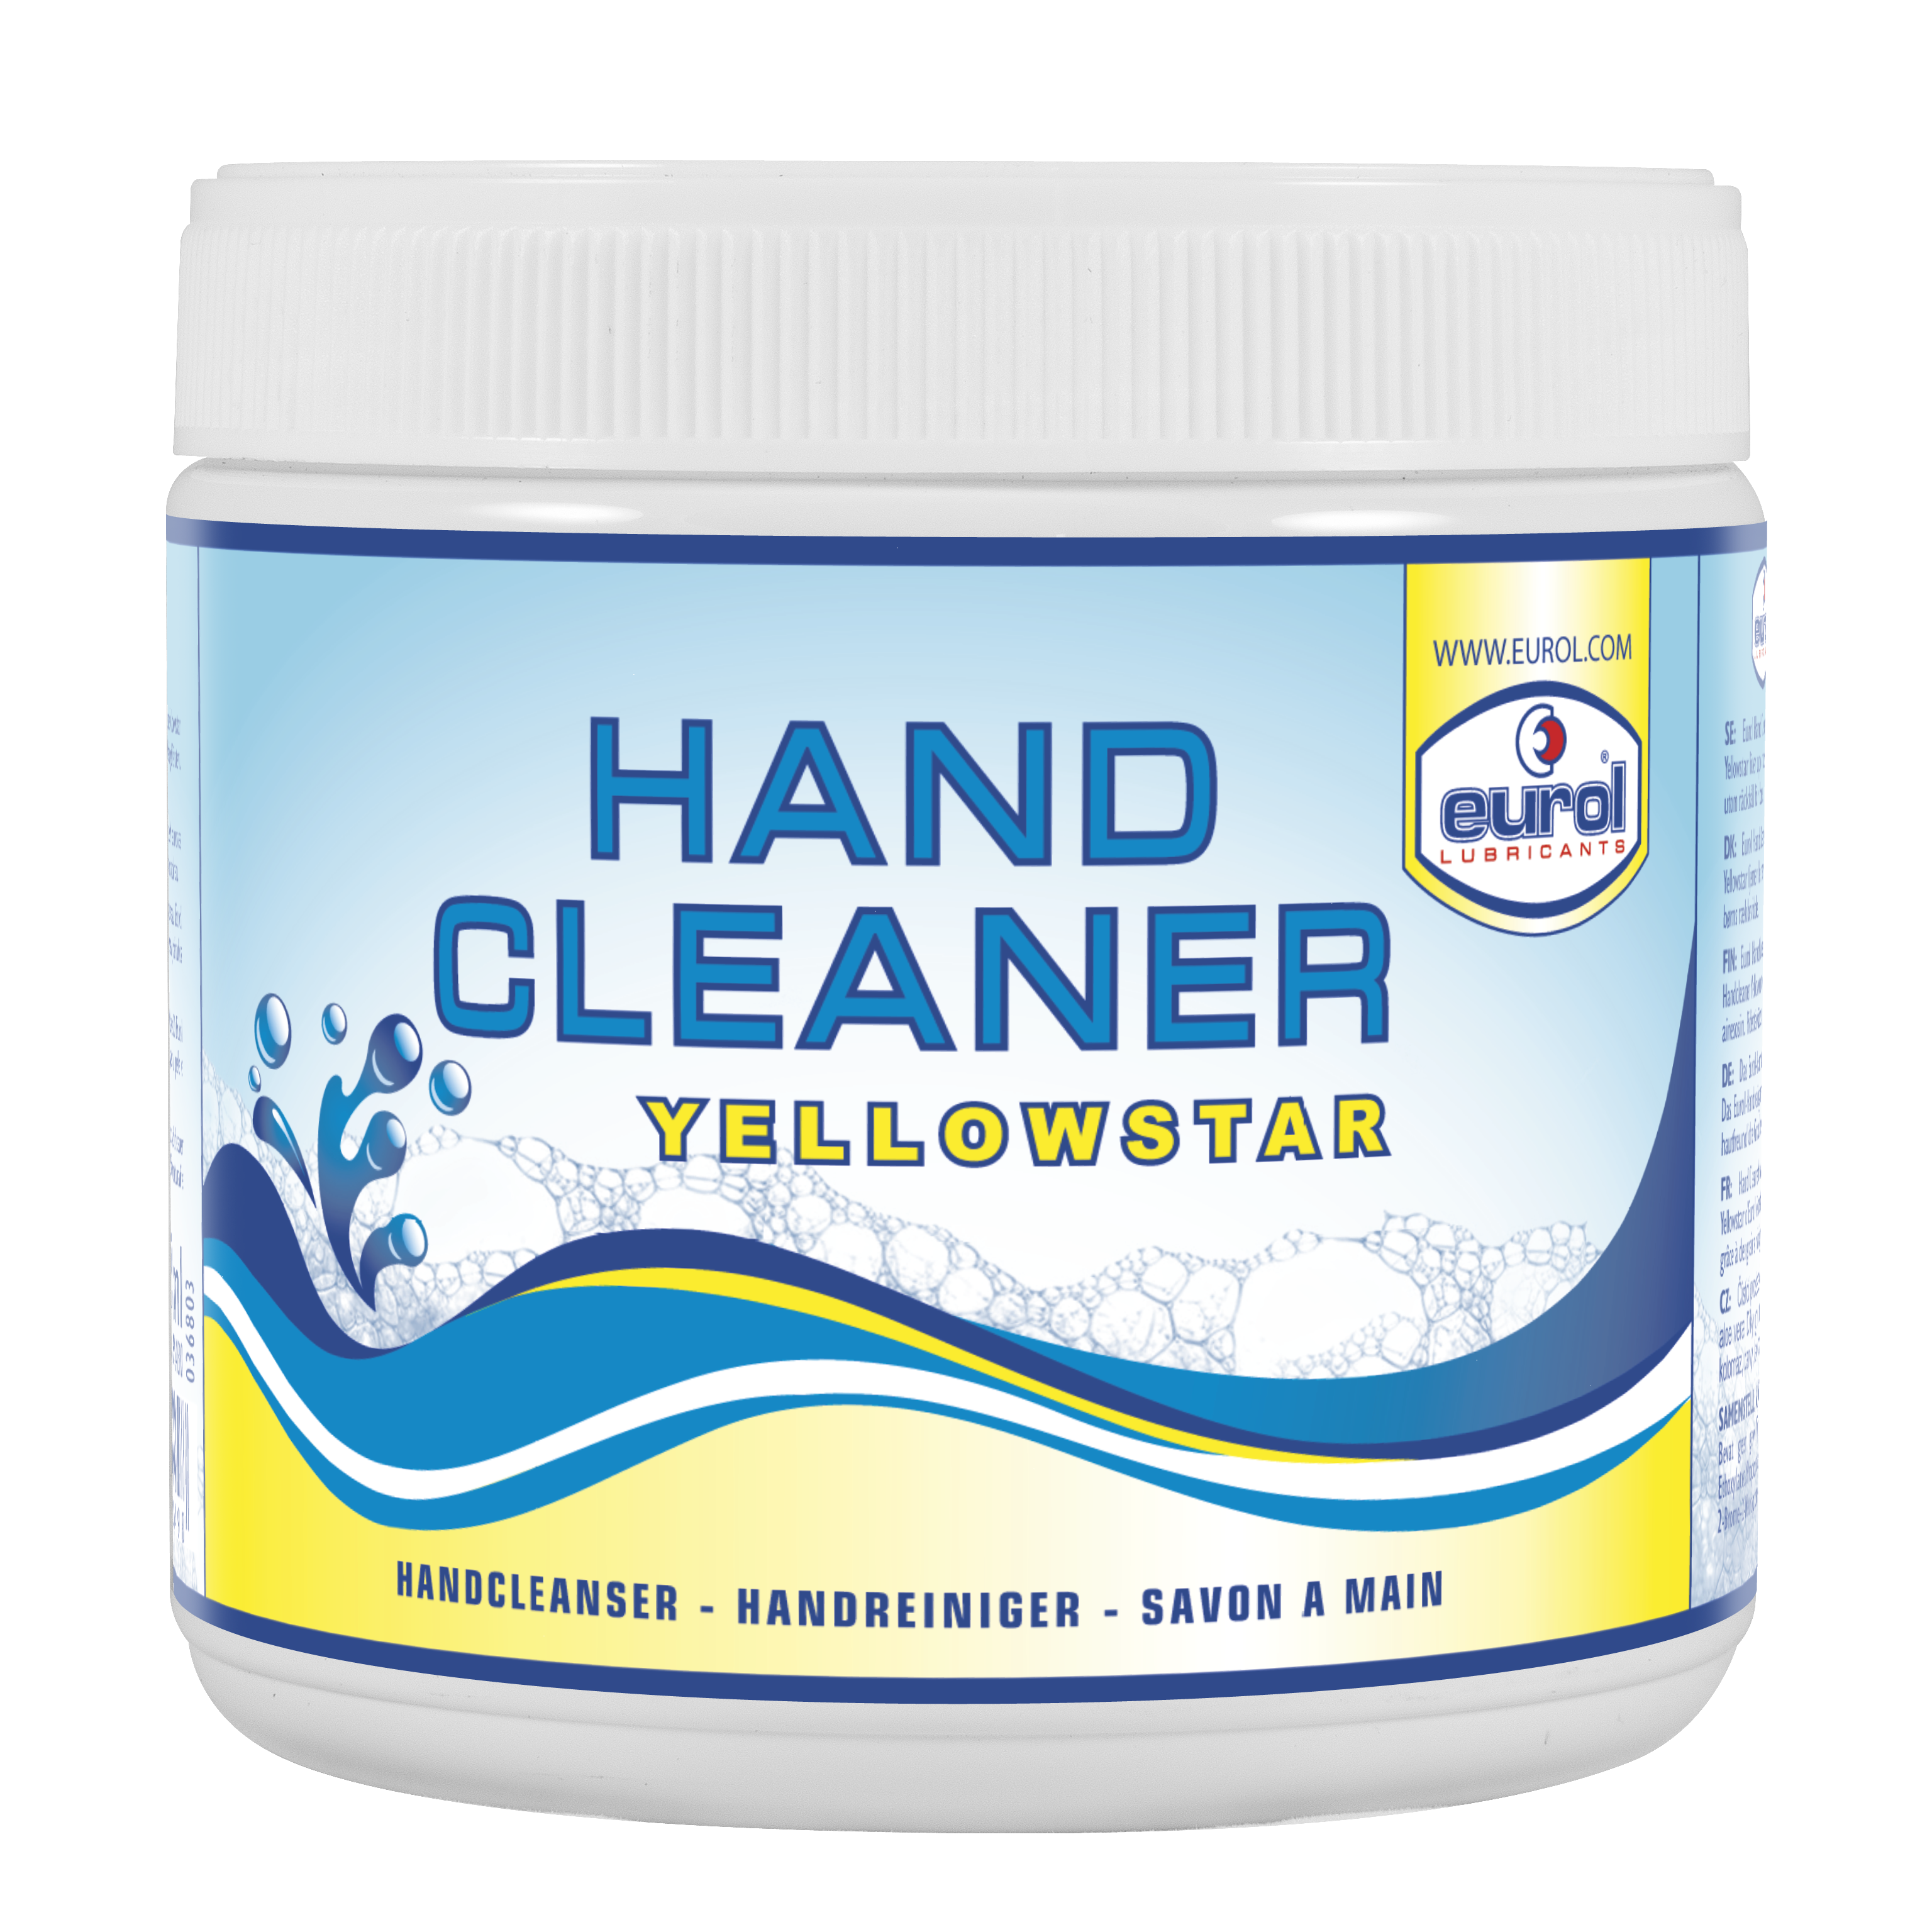 Eurol Hand Cleaner Yellowstar, 600 ml